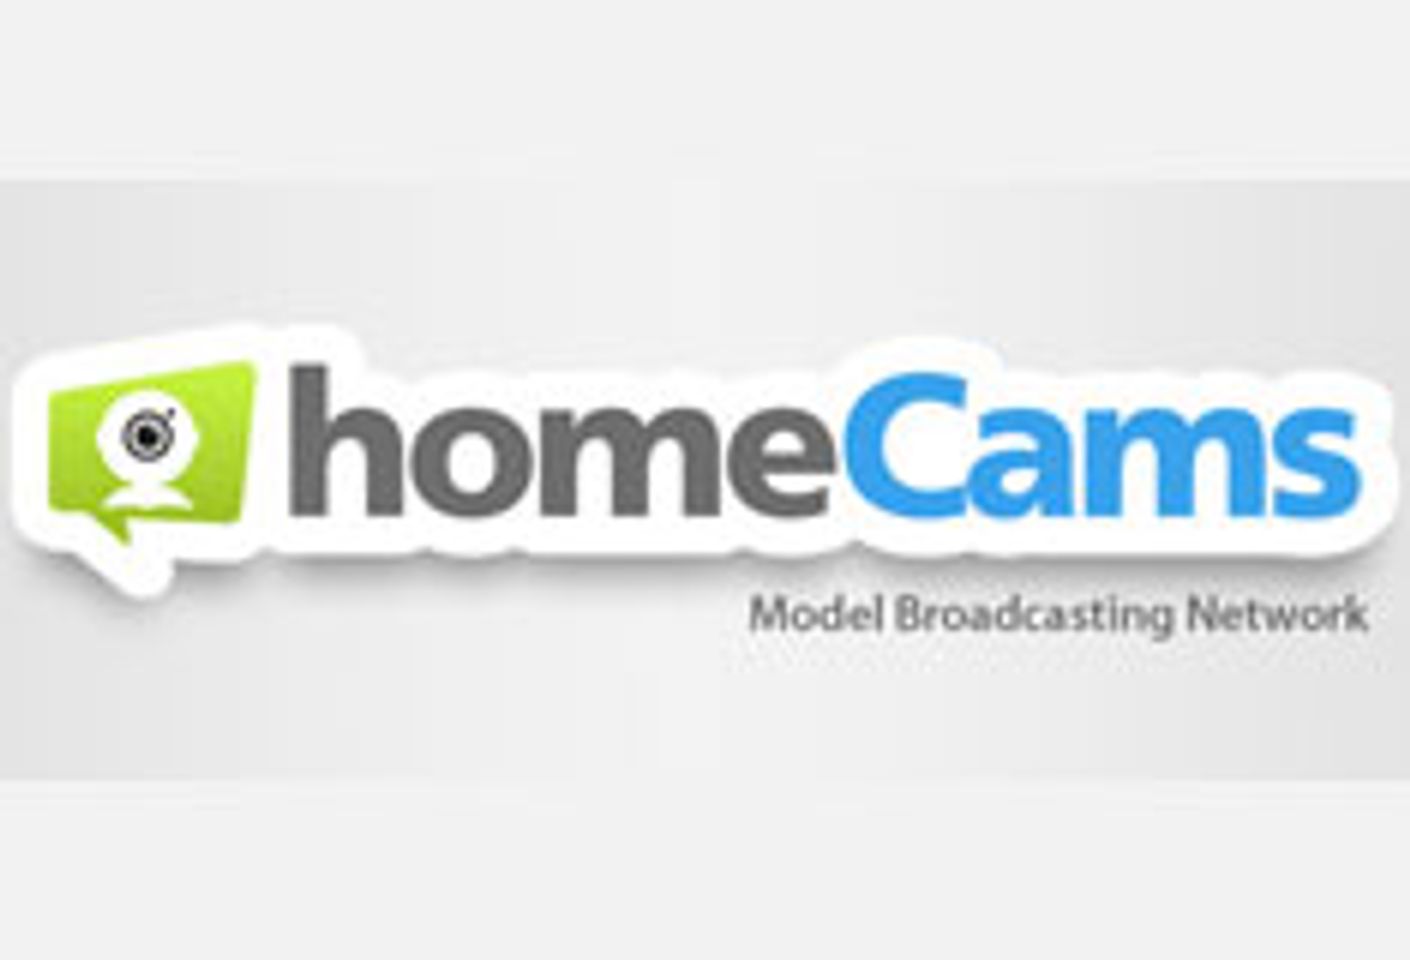 Gamma's homeCams MBN Holds November Cam Model Contest